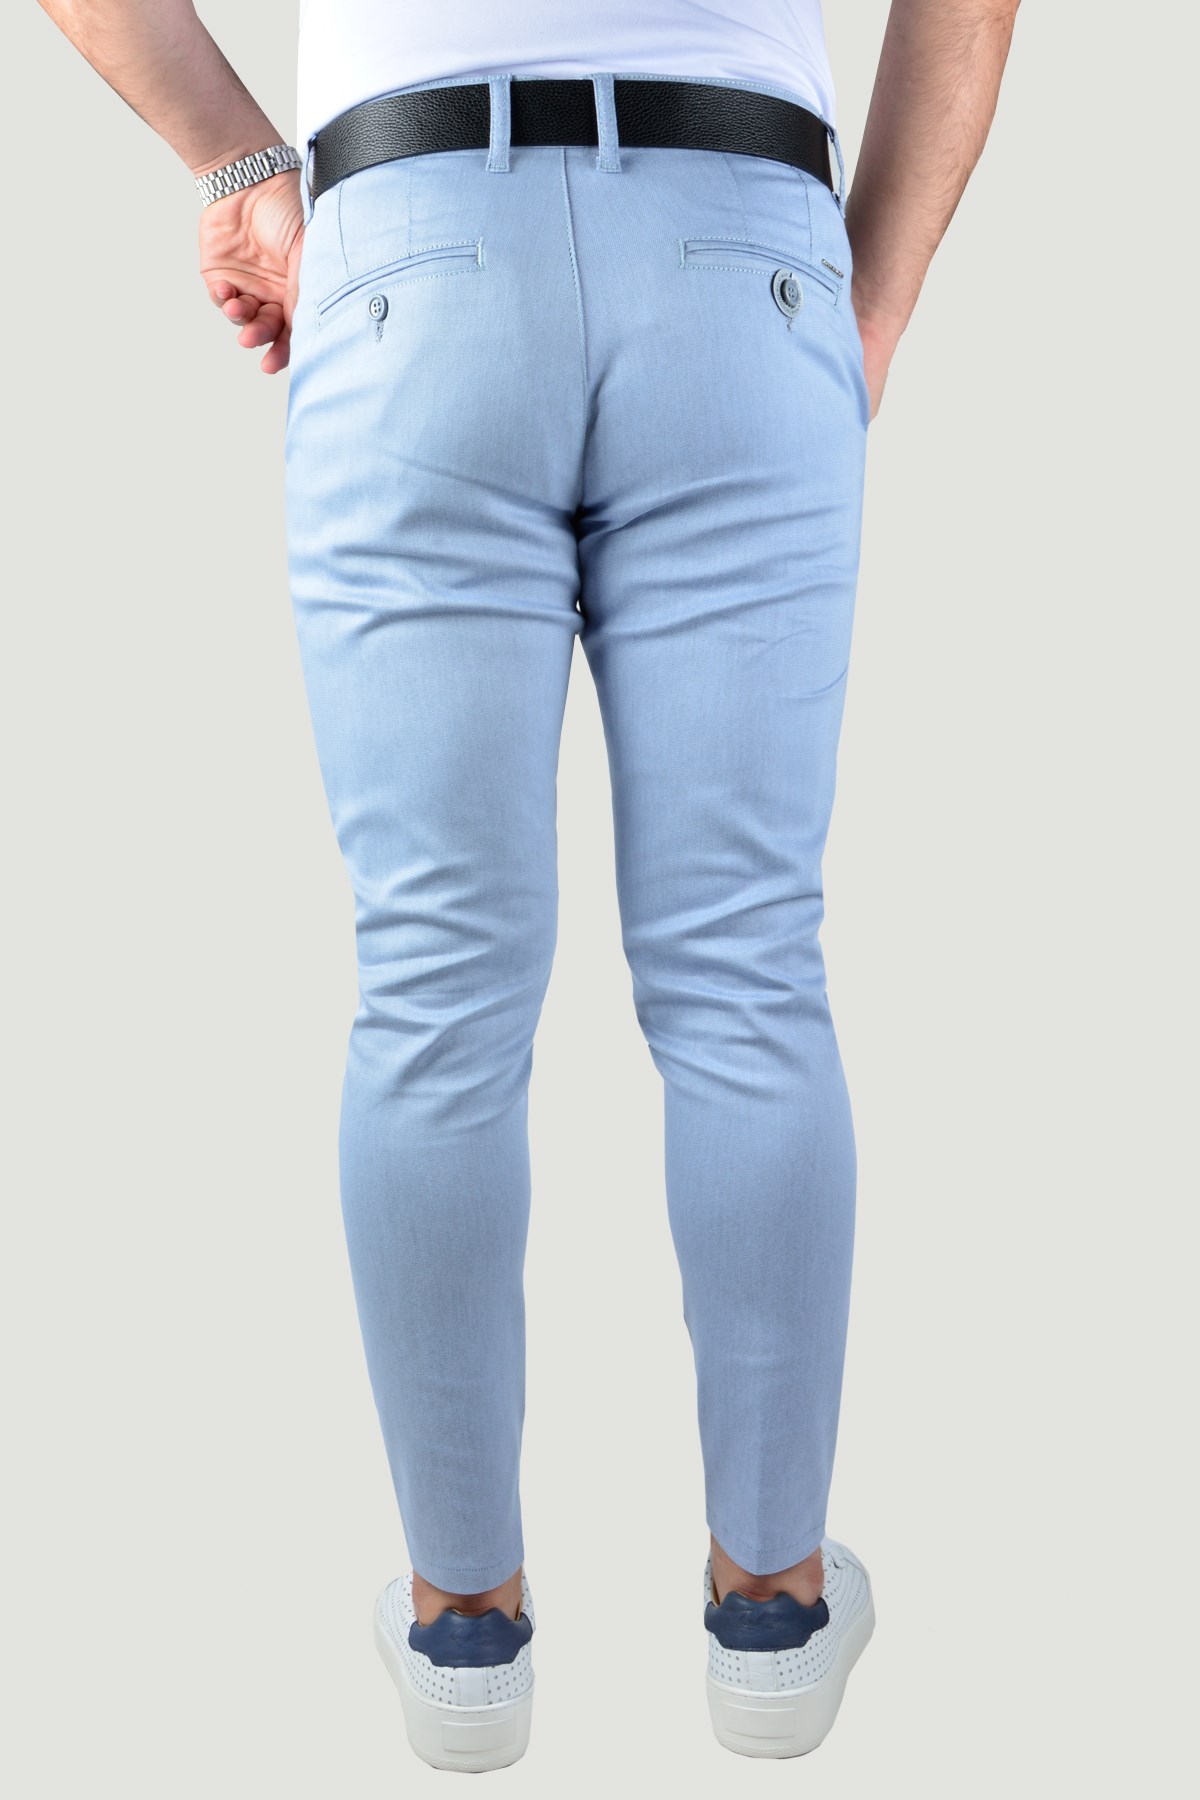 Erkek Keten Pantolon 9K-2200187-013 Açık Mavi | Terapi Giyim